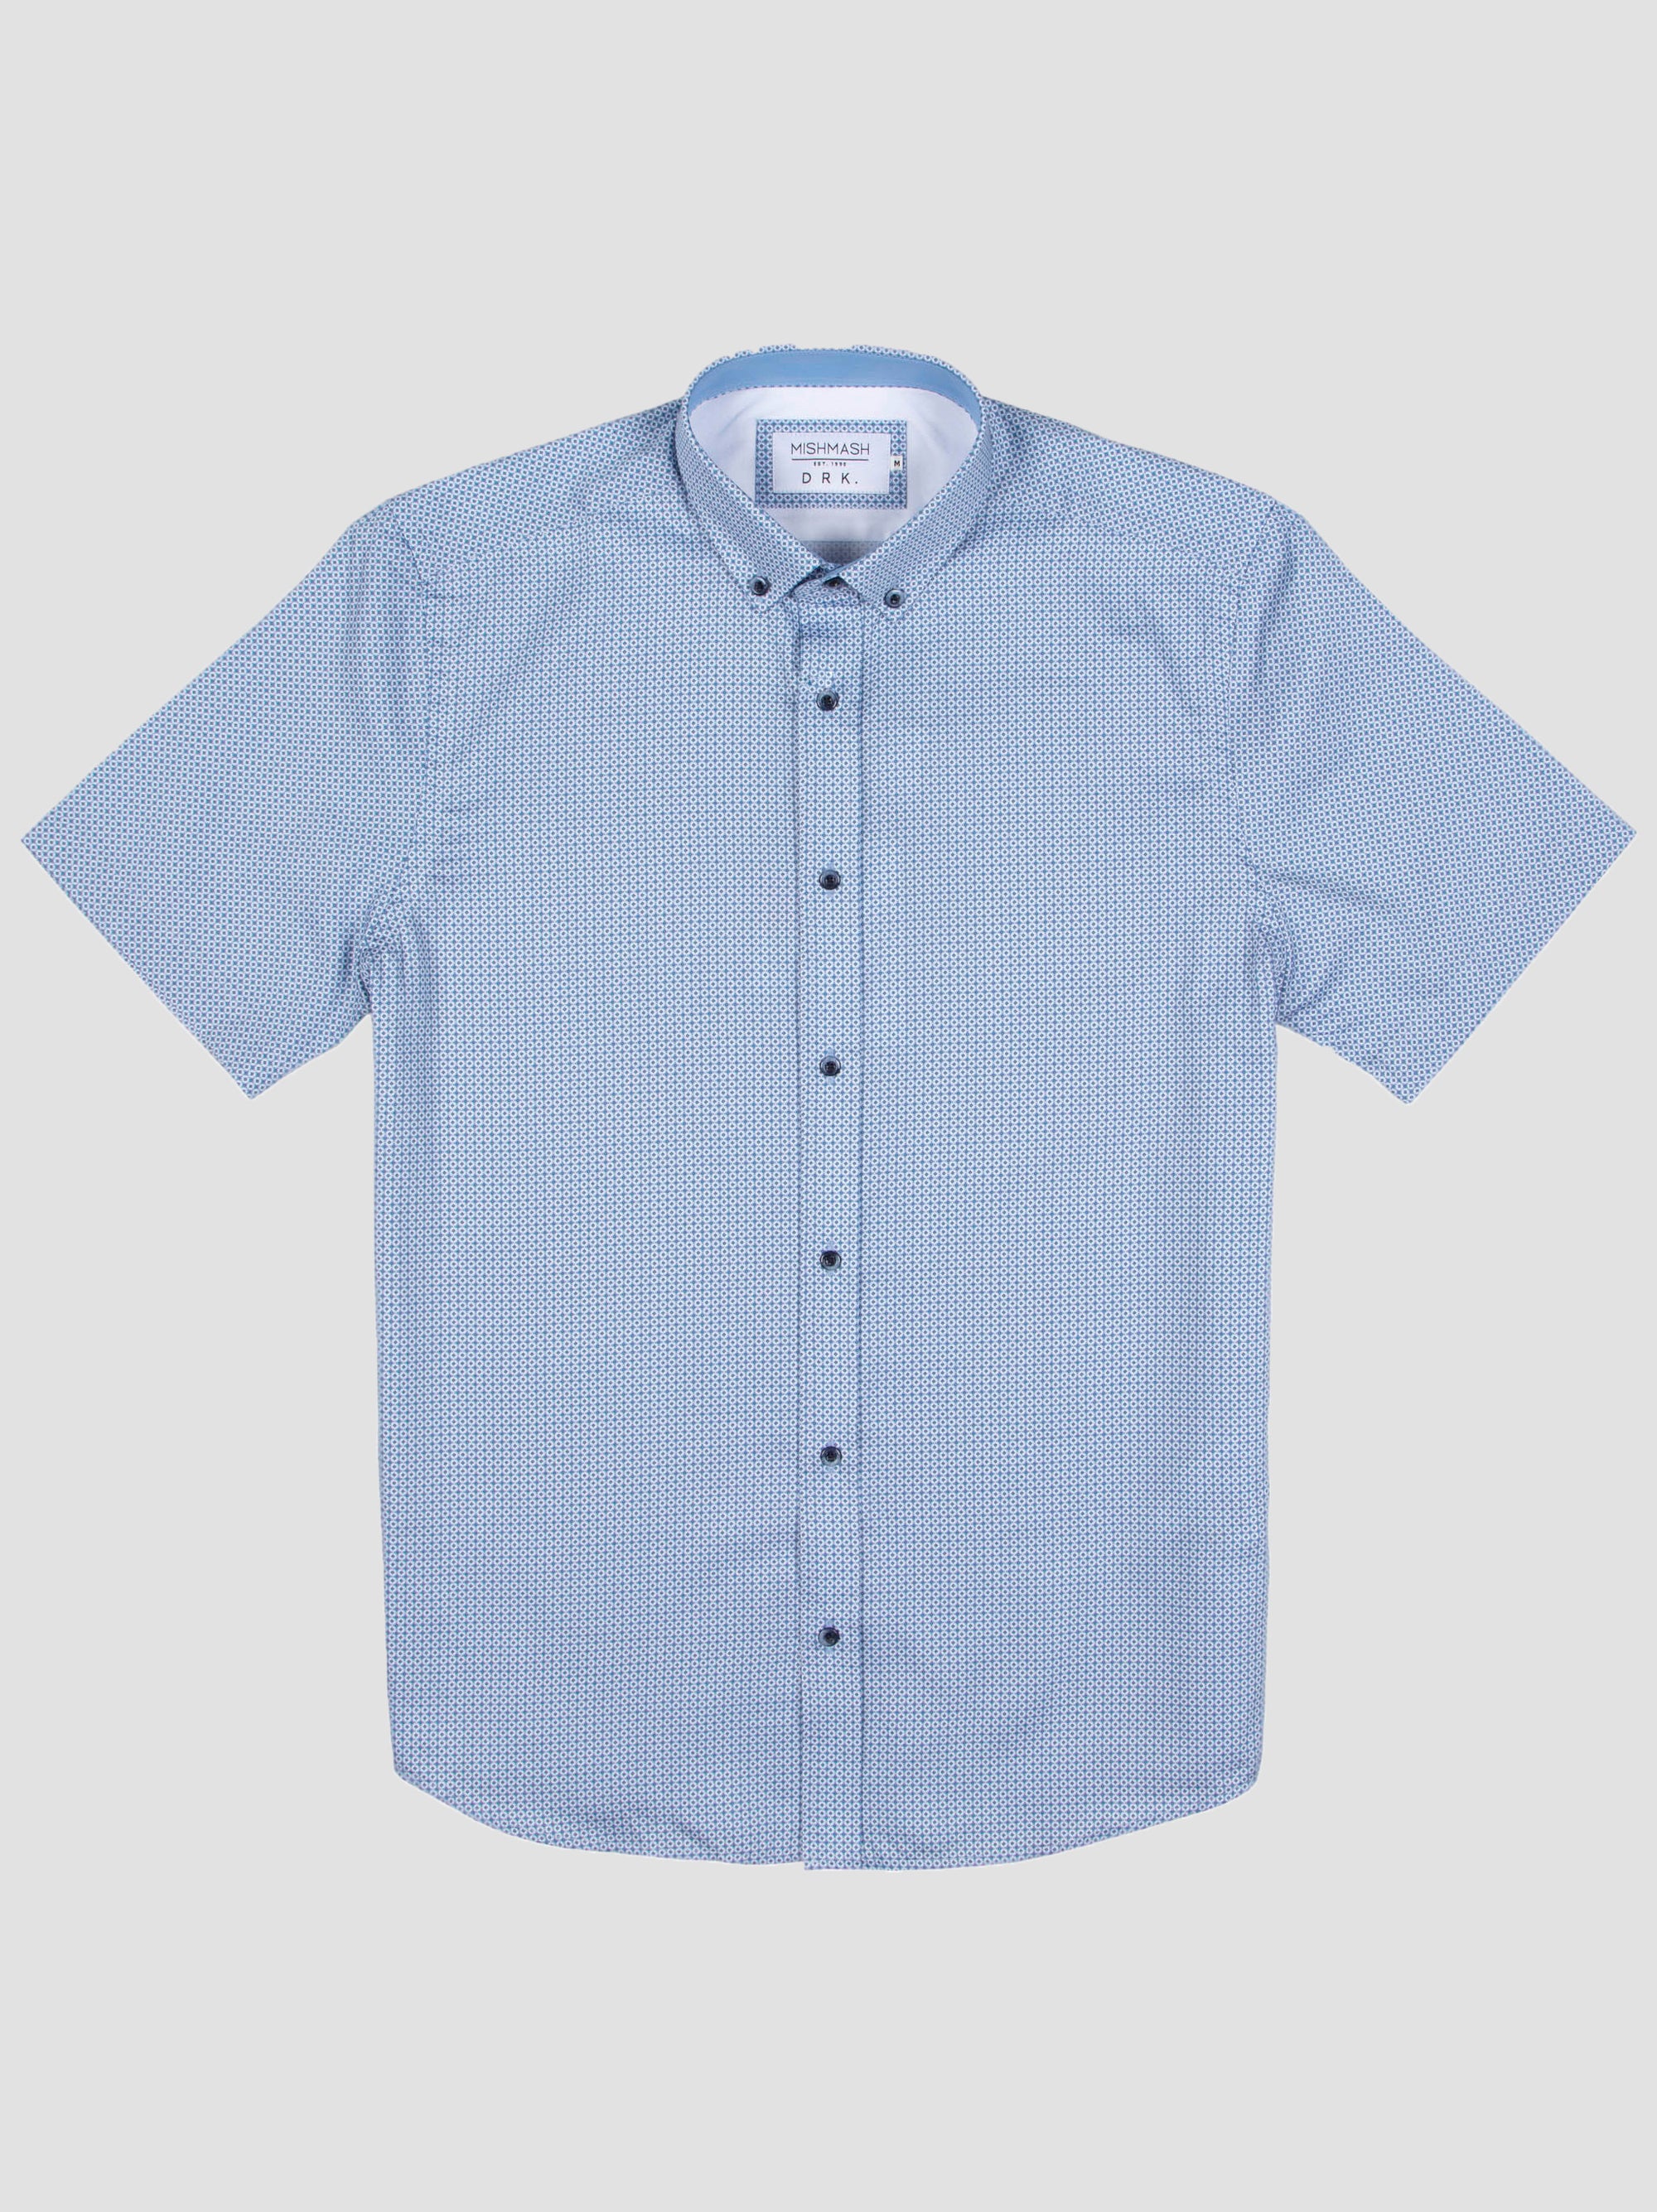 gonzalo-sky-bue-geometric-printed-mens-cotton-short-sleeve-shirt-mish-mash